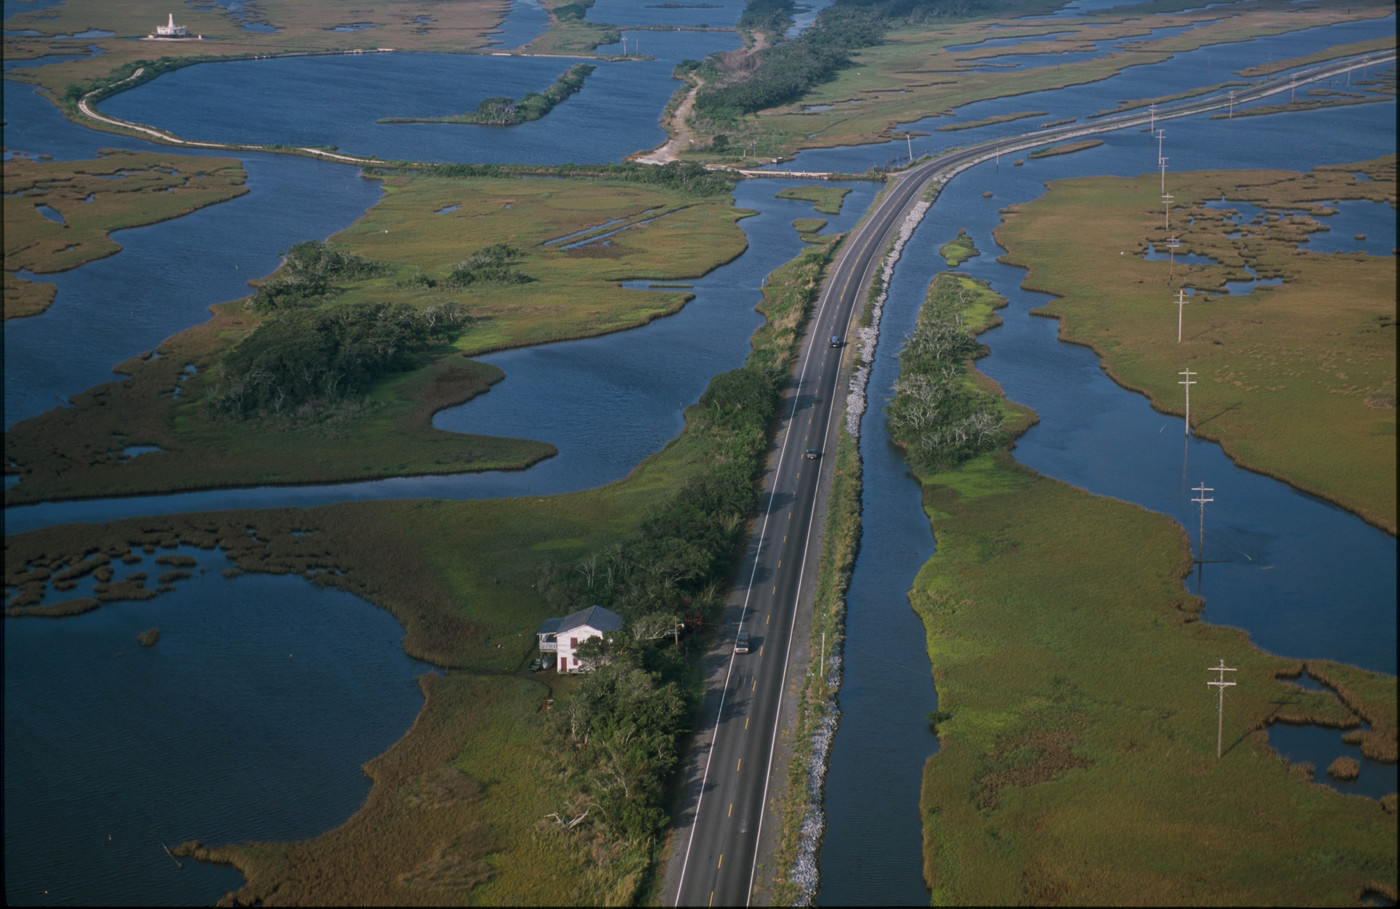 From the book "America's Wetland/Louisiana's Vanishing Coast"